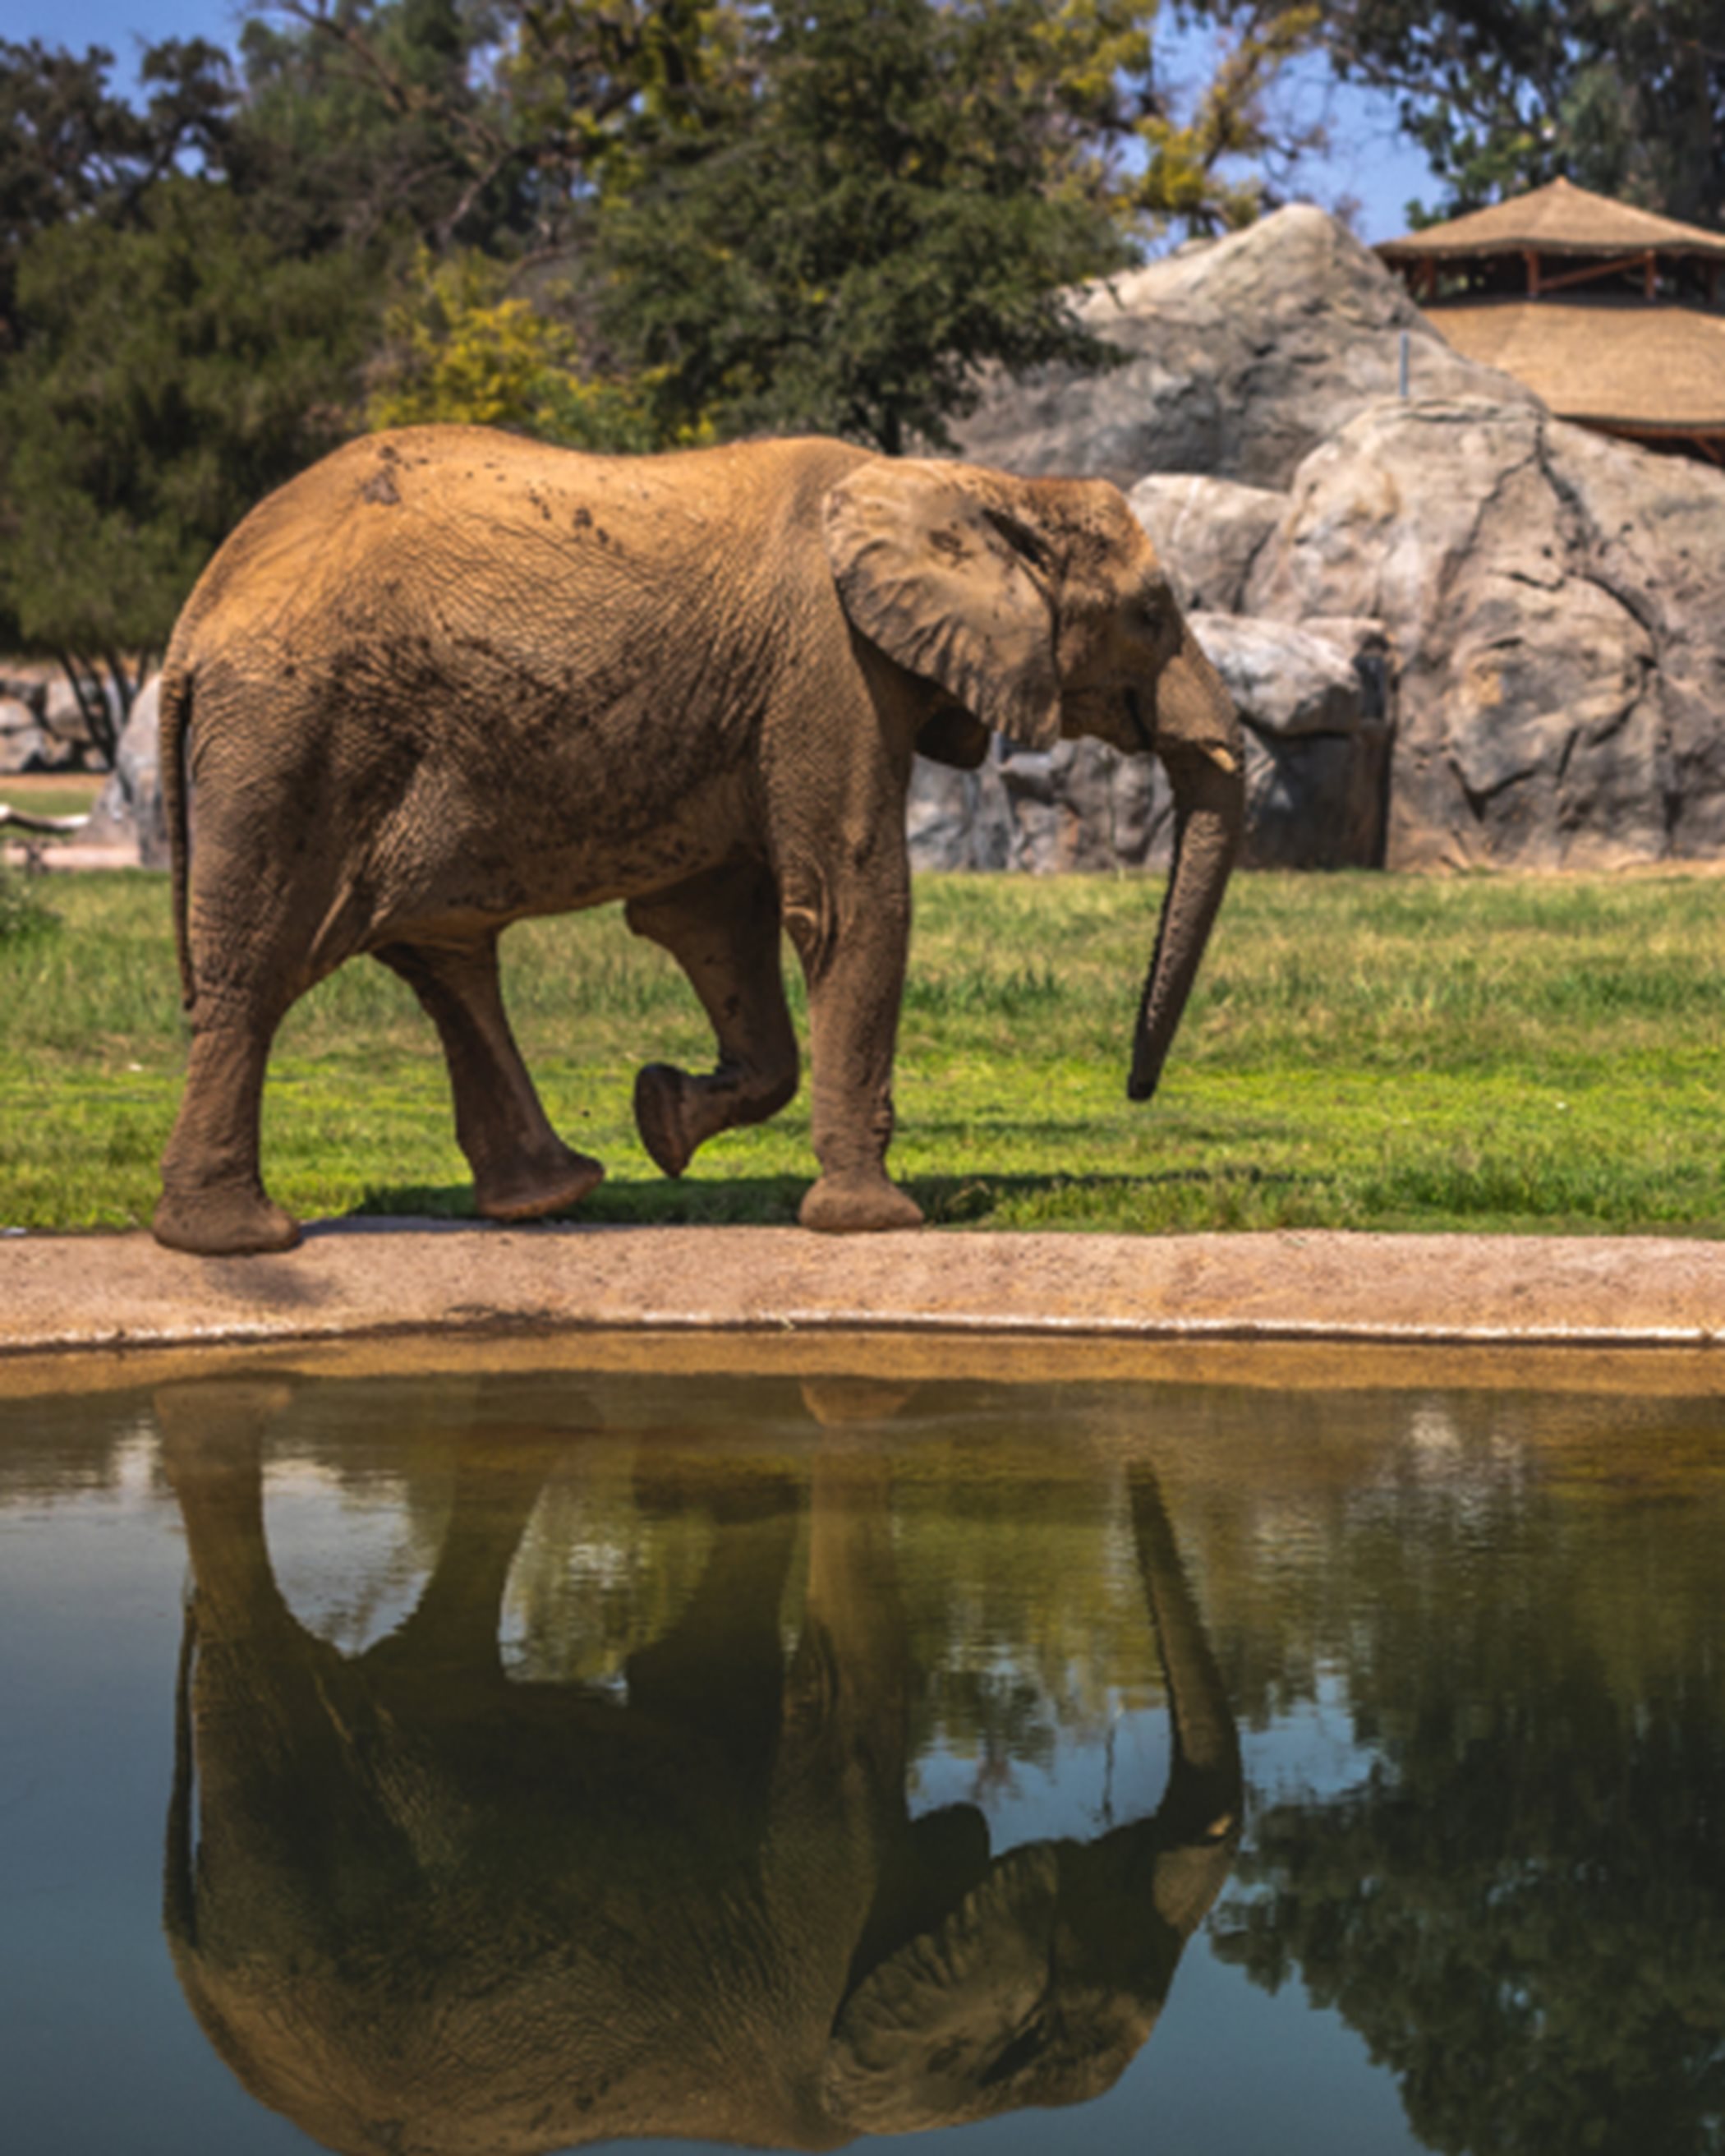 Elephant at the Fresno Zoo